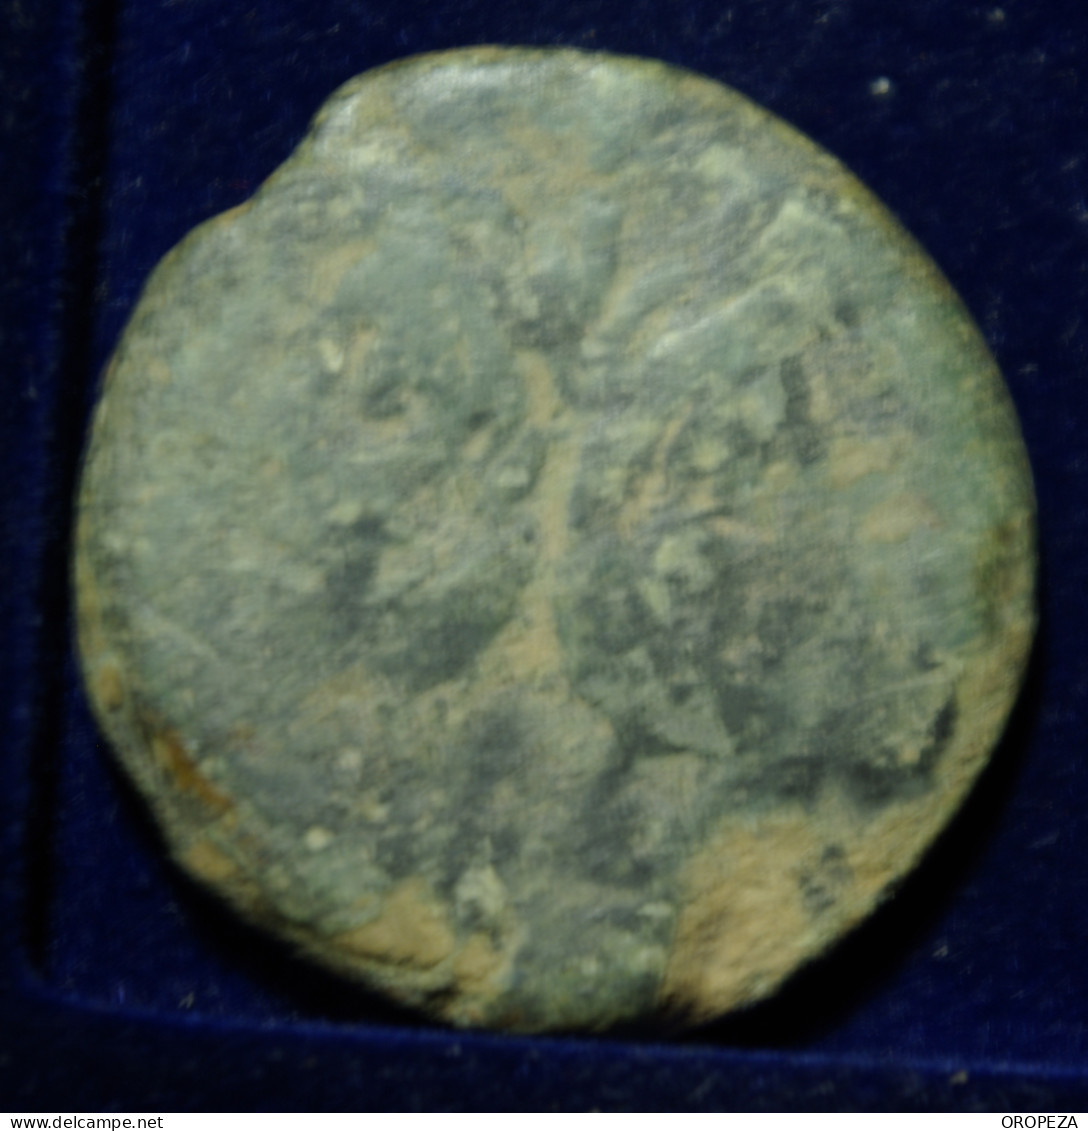 95  -  BONITO  AS  DE  JANO - SERIE SIMBOLOS - VICTORIA Y PUNTA DE LANZA - MBC - Republic (280 BC To 27 BC)